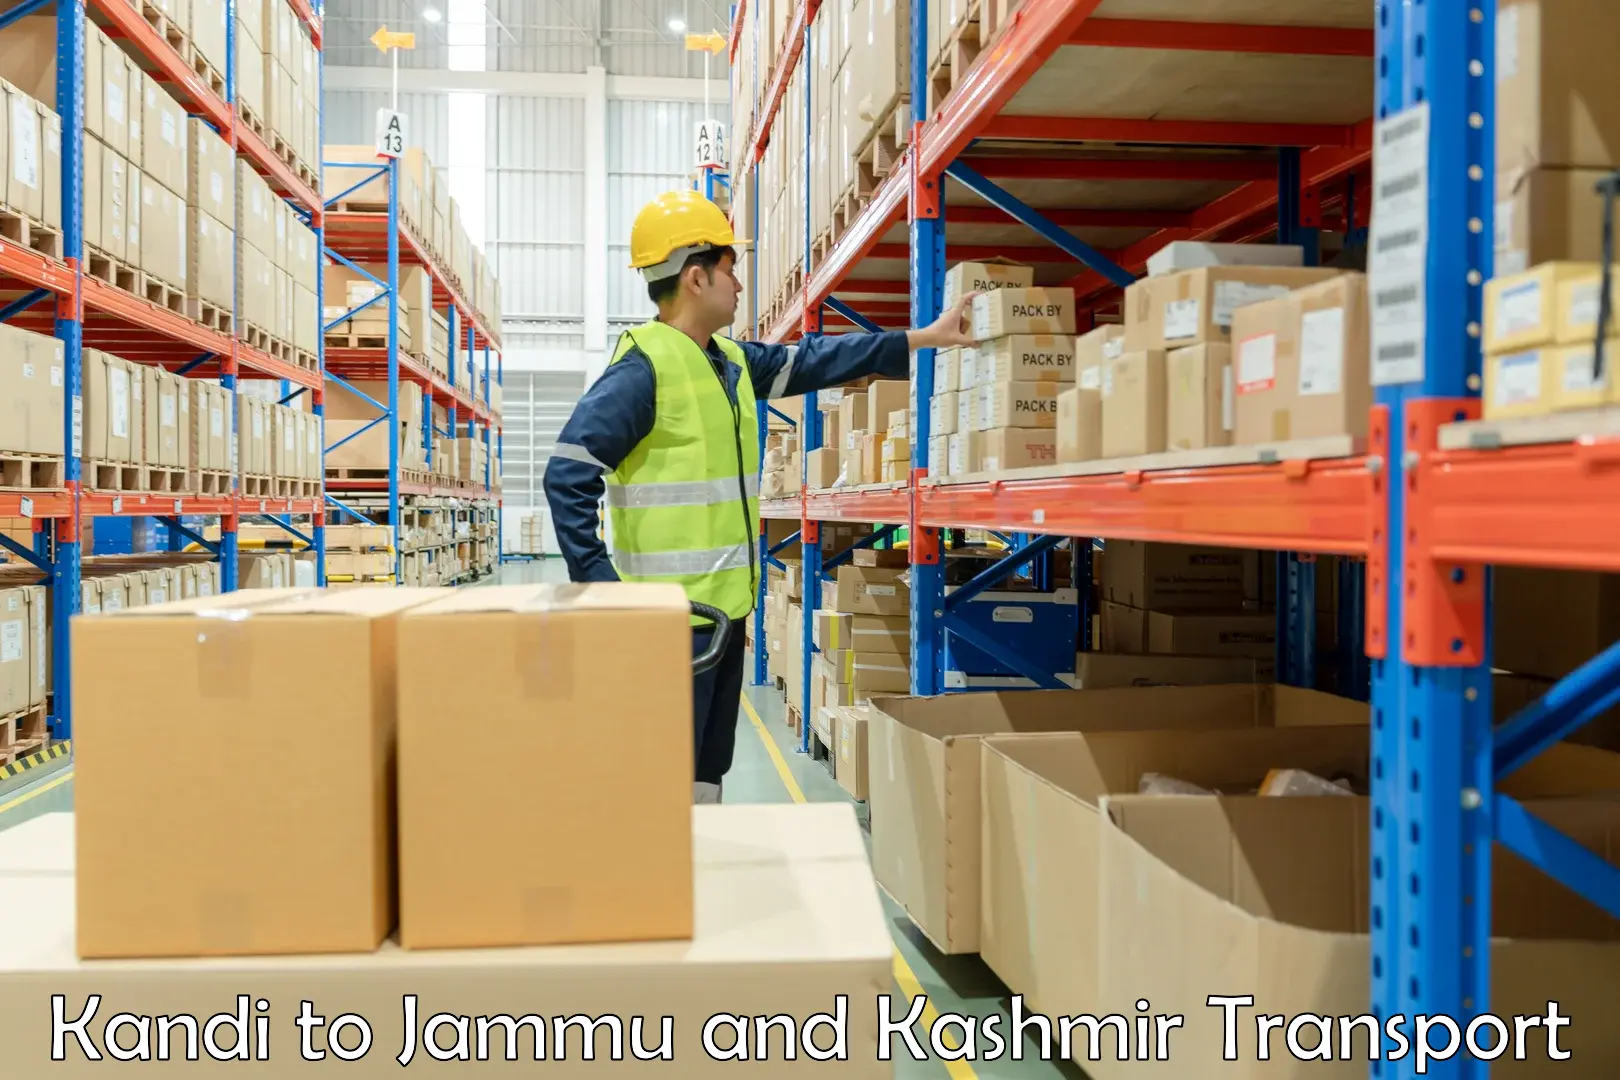 Shipping partner Kandi to University of Jammu